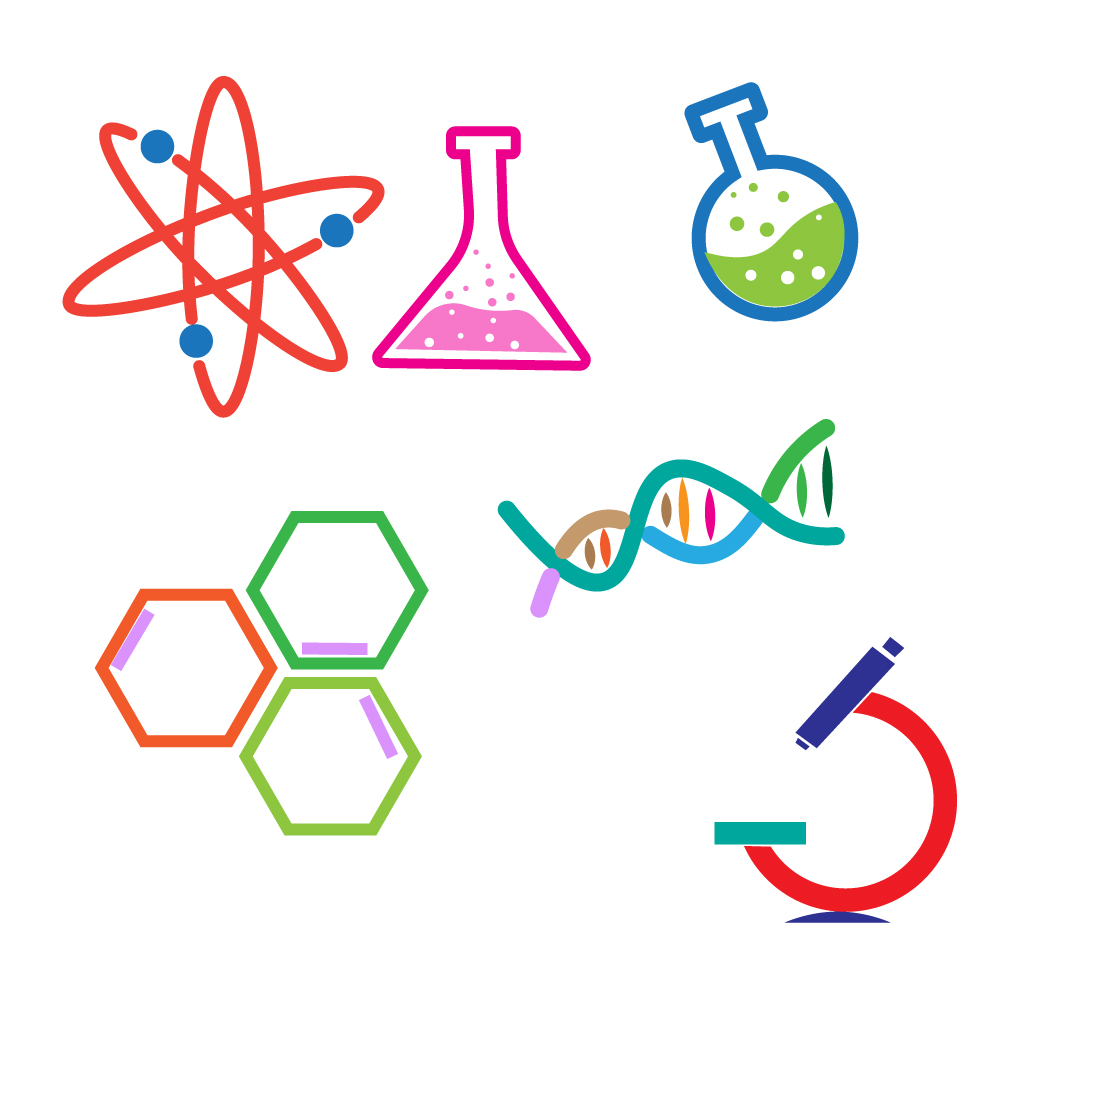 Group op science logo or bundle or science logos preview image.